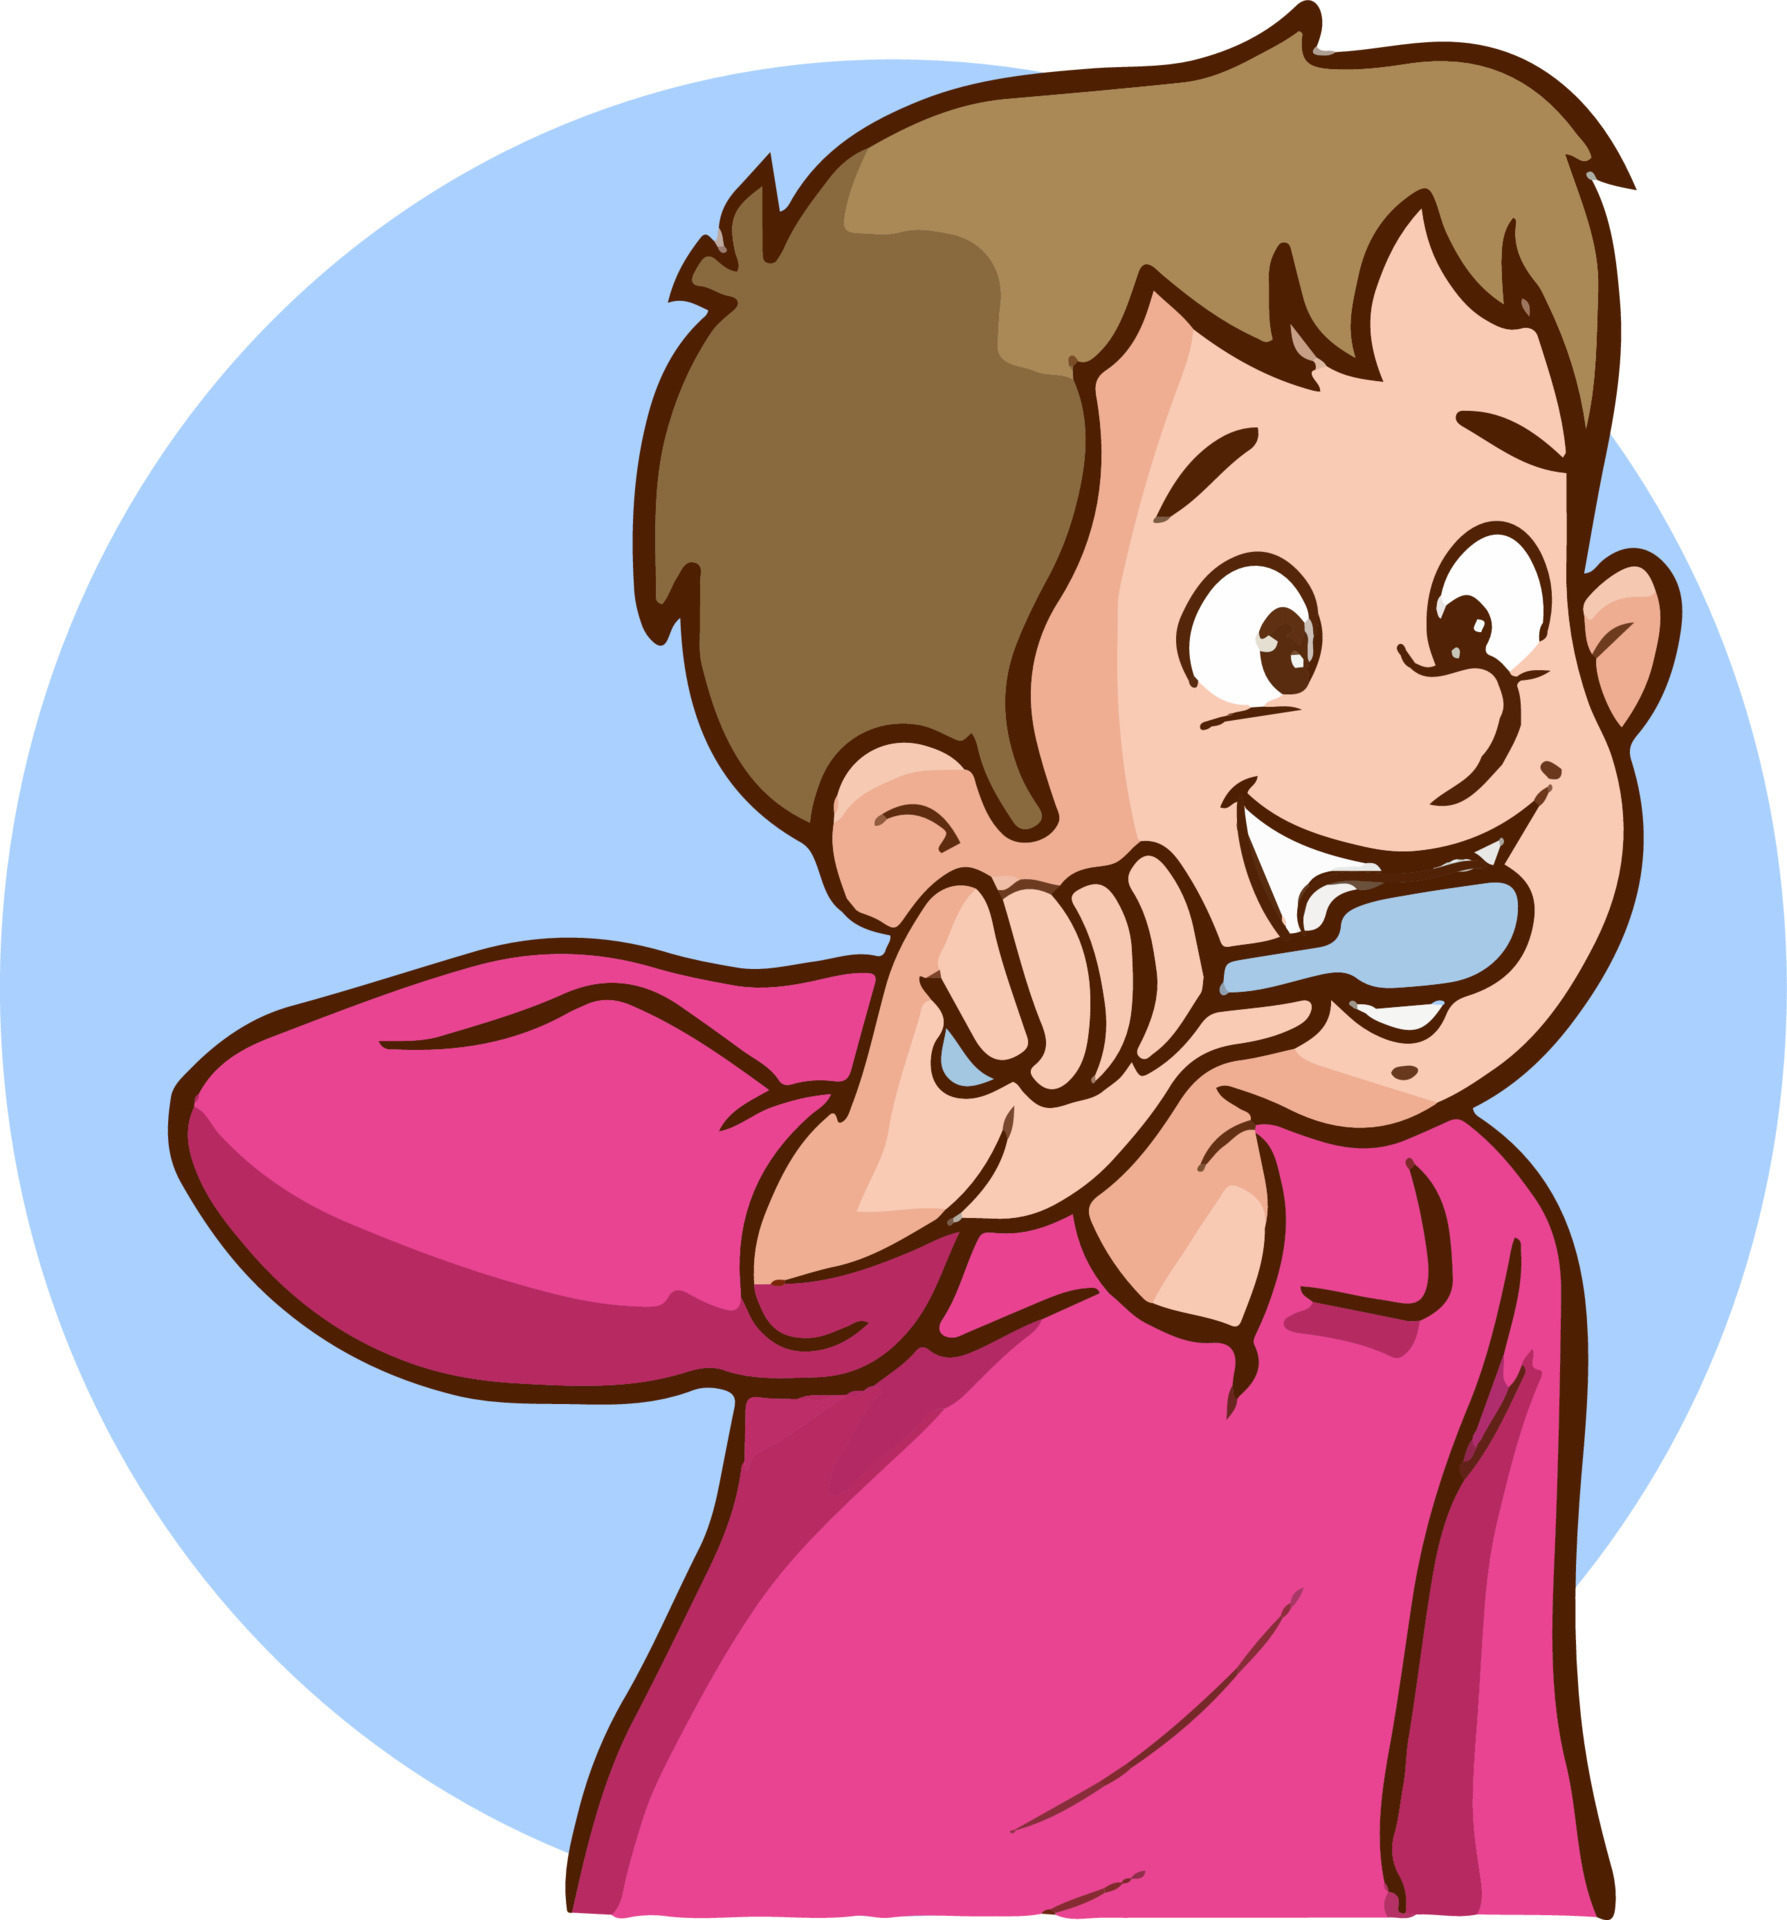 Cute Little Boy Brushing Teeth ilustración de stock 471511817   Shutterstock